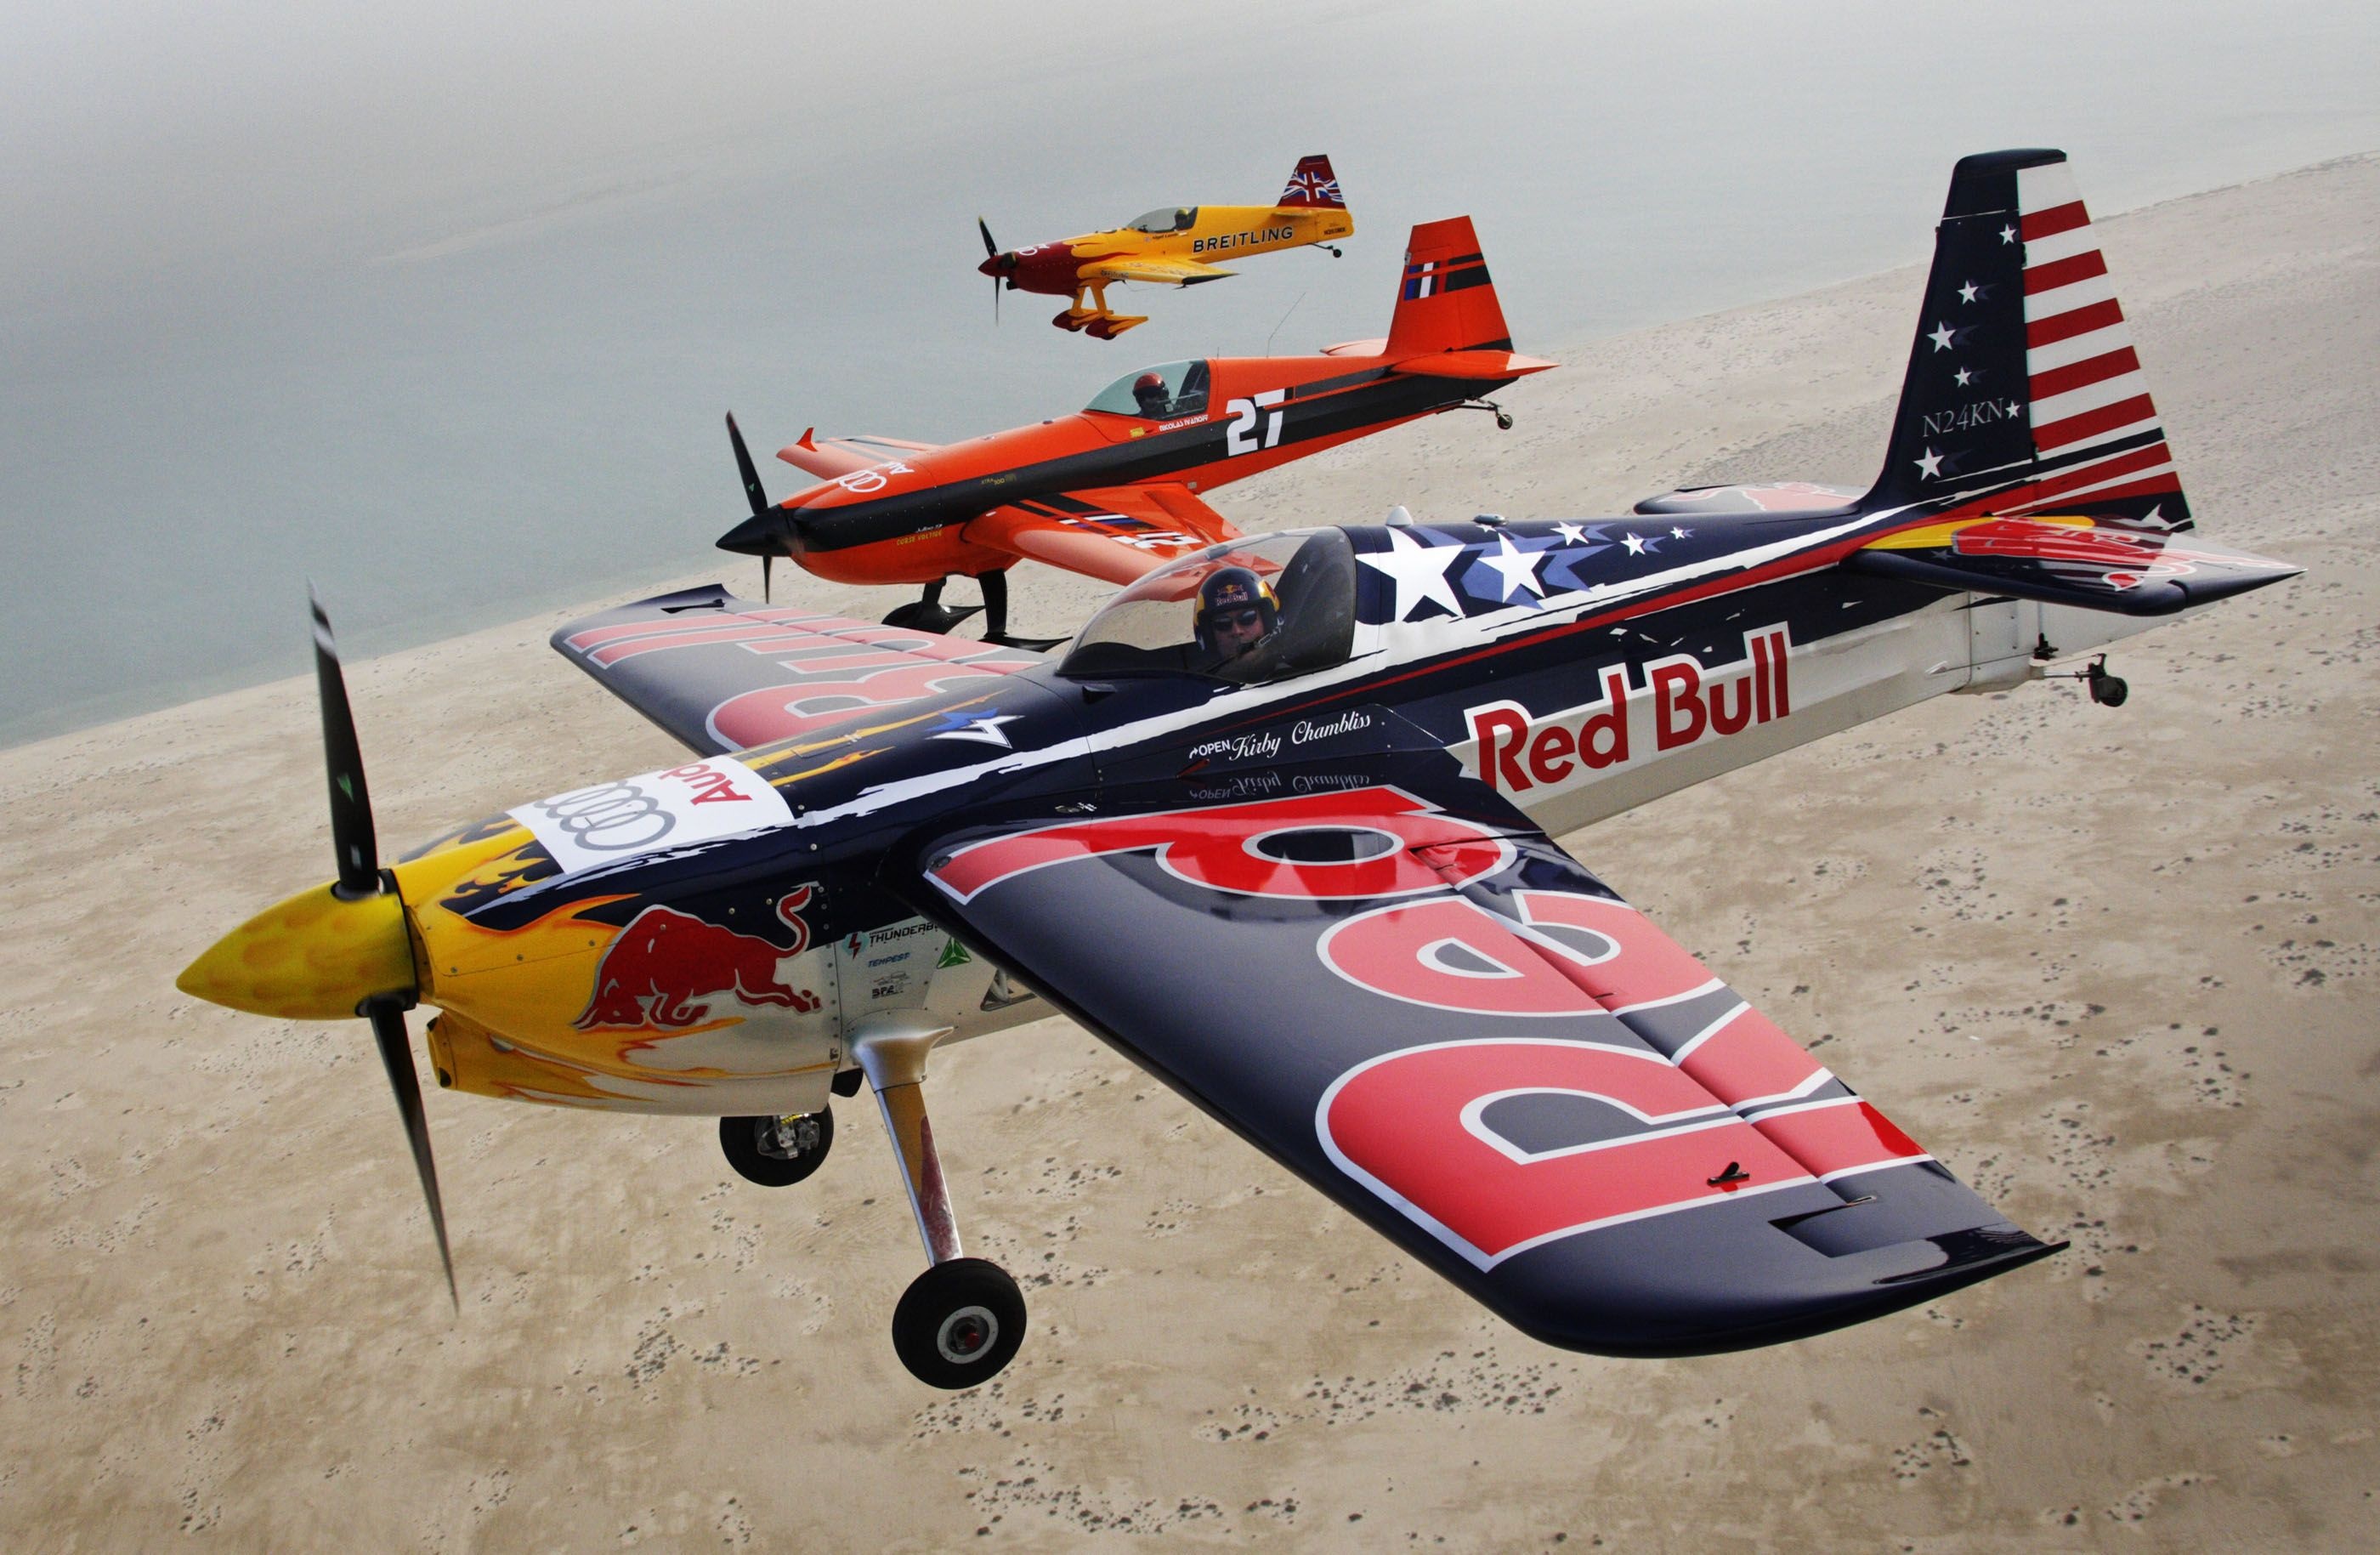 Air Racing: Red Bull Air Race World Championship, Ultralight aviation, Air sport. 2800x1830 HD Wallpaper.